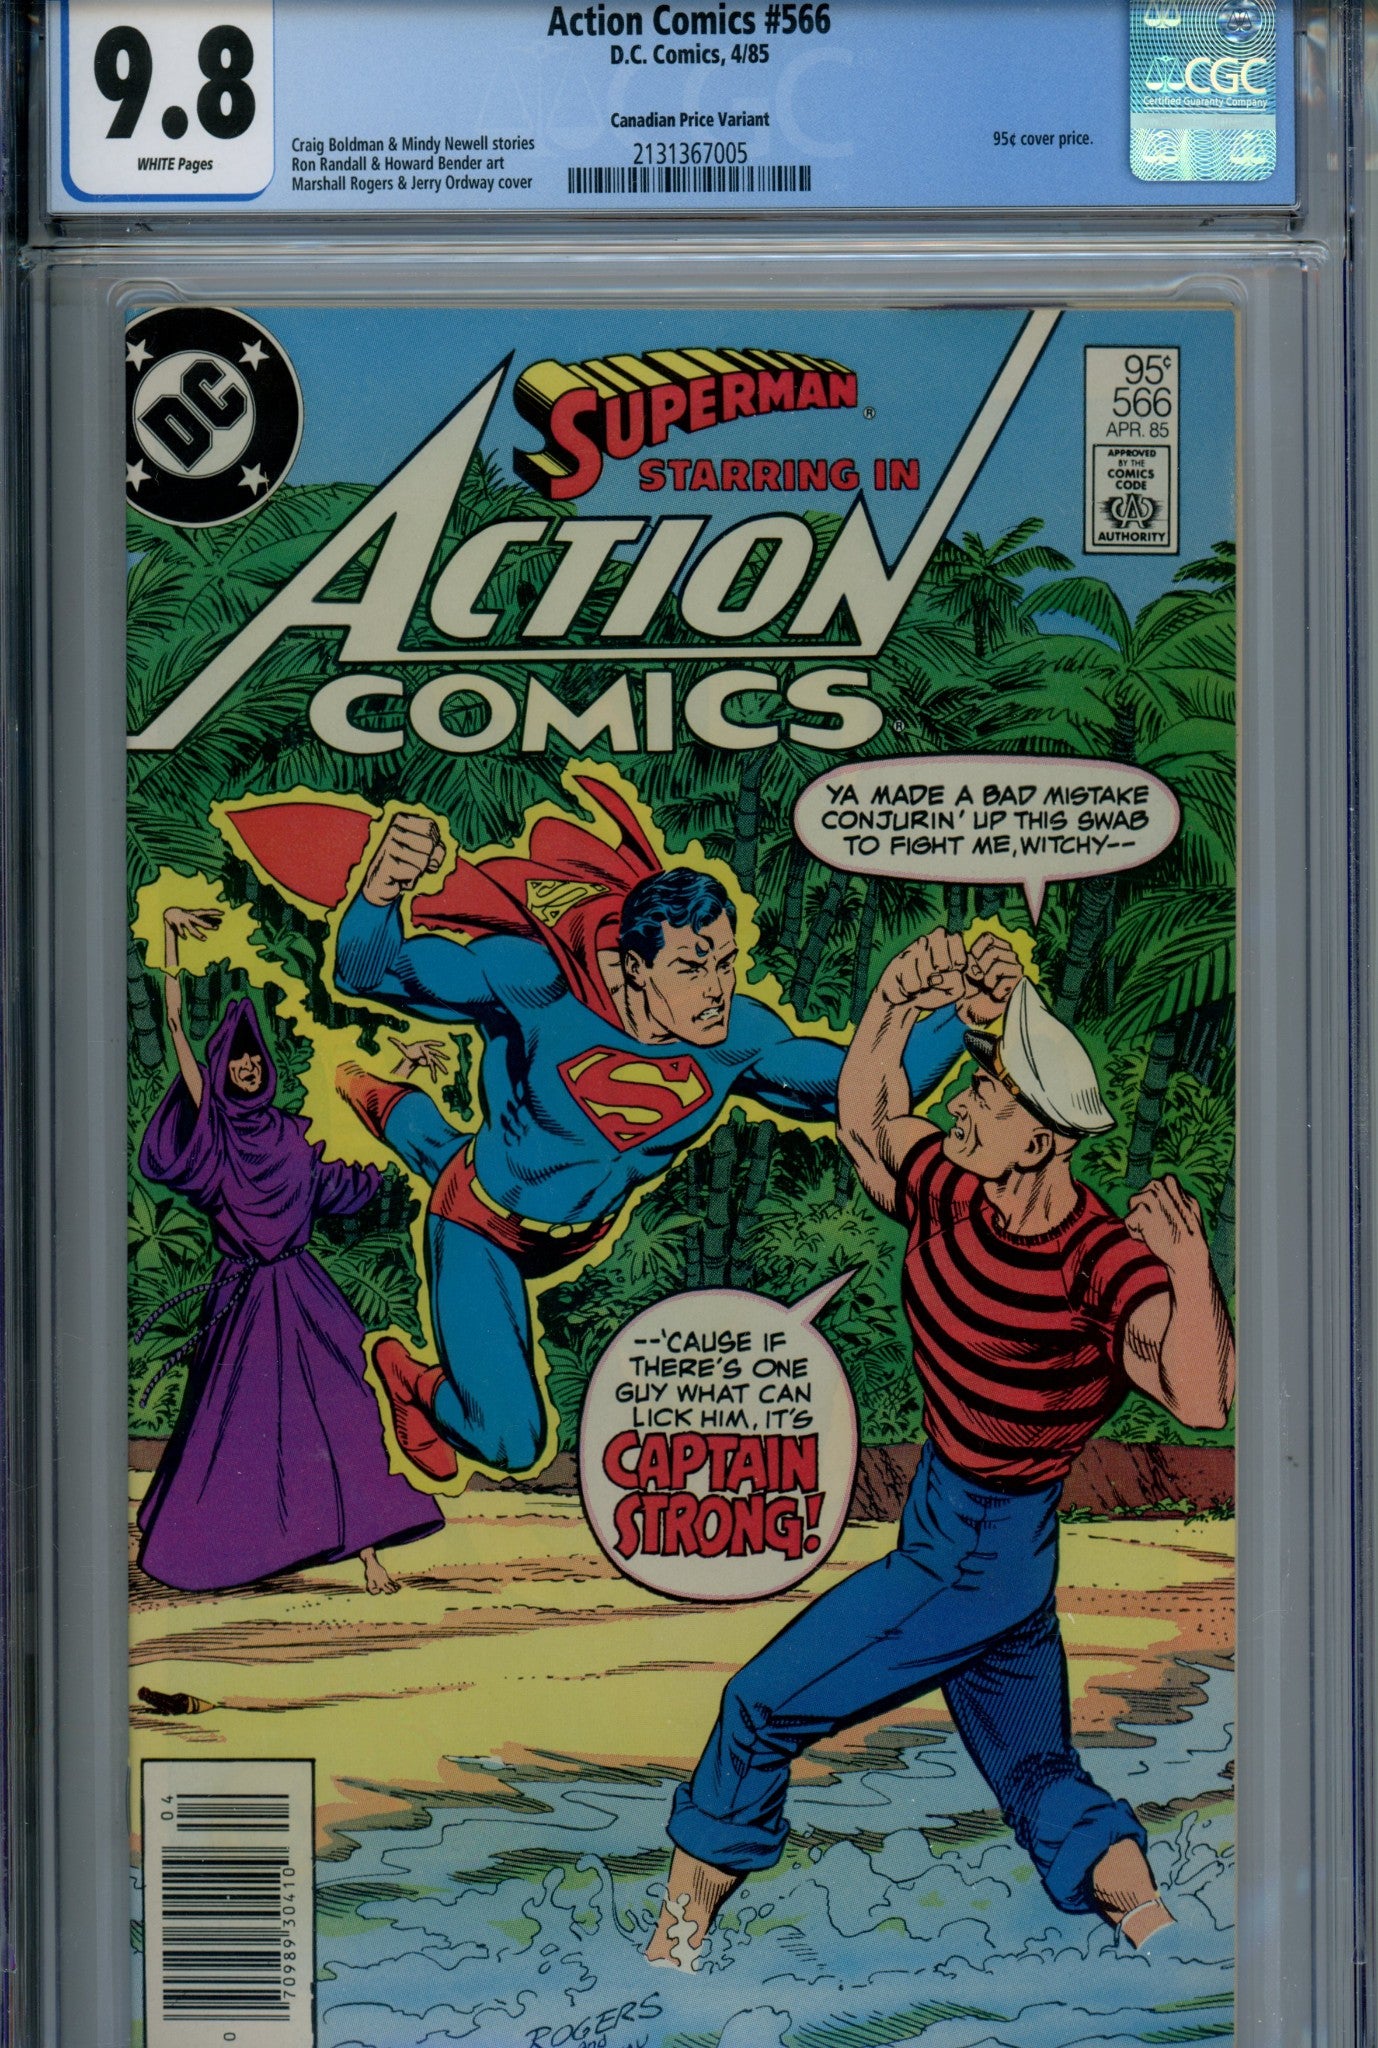 Action Comics Vol 1 566 Canadian Price Variant CGC 9.8 (1985)